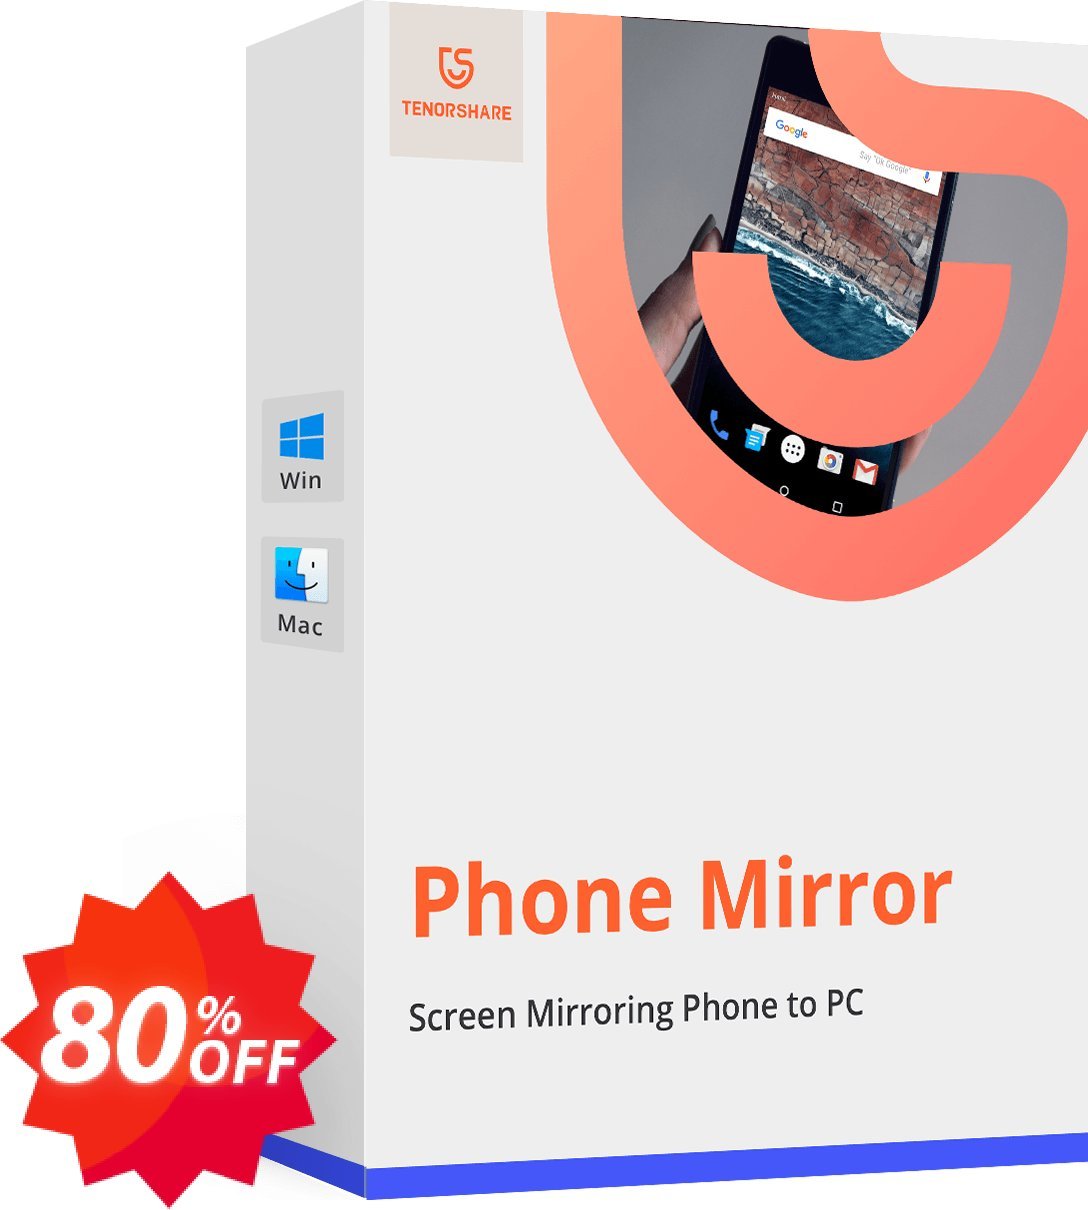 Tenorshare Phone Mirror, 1 Quarter  Coupon code 80% discount 